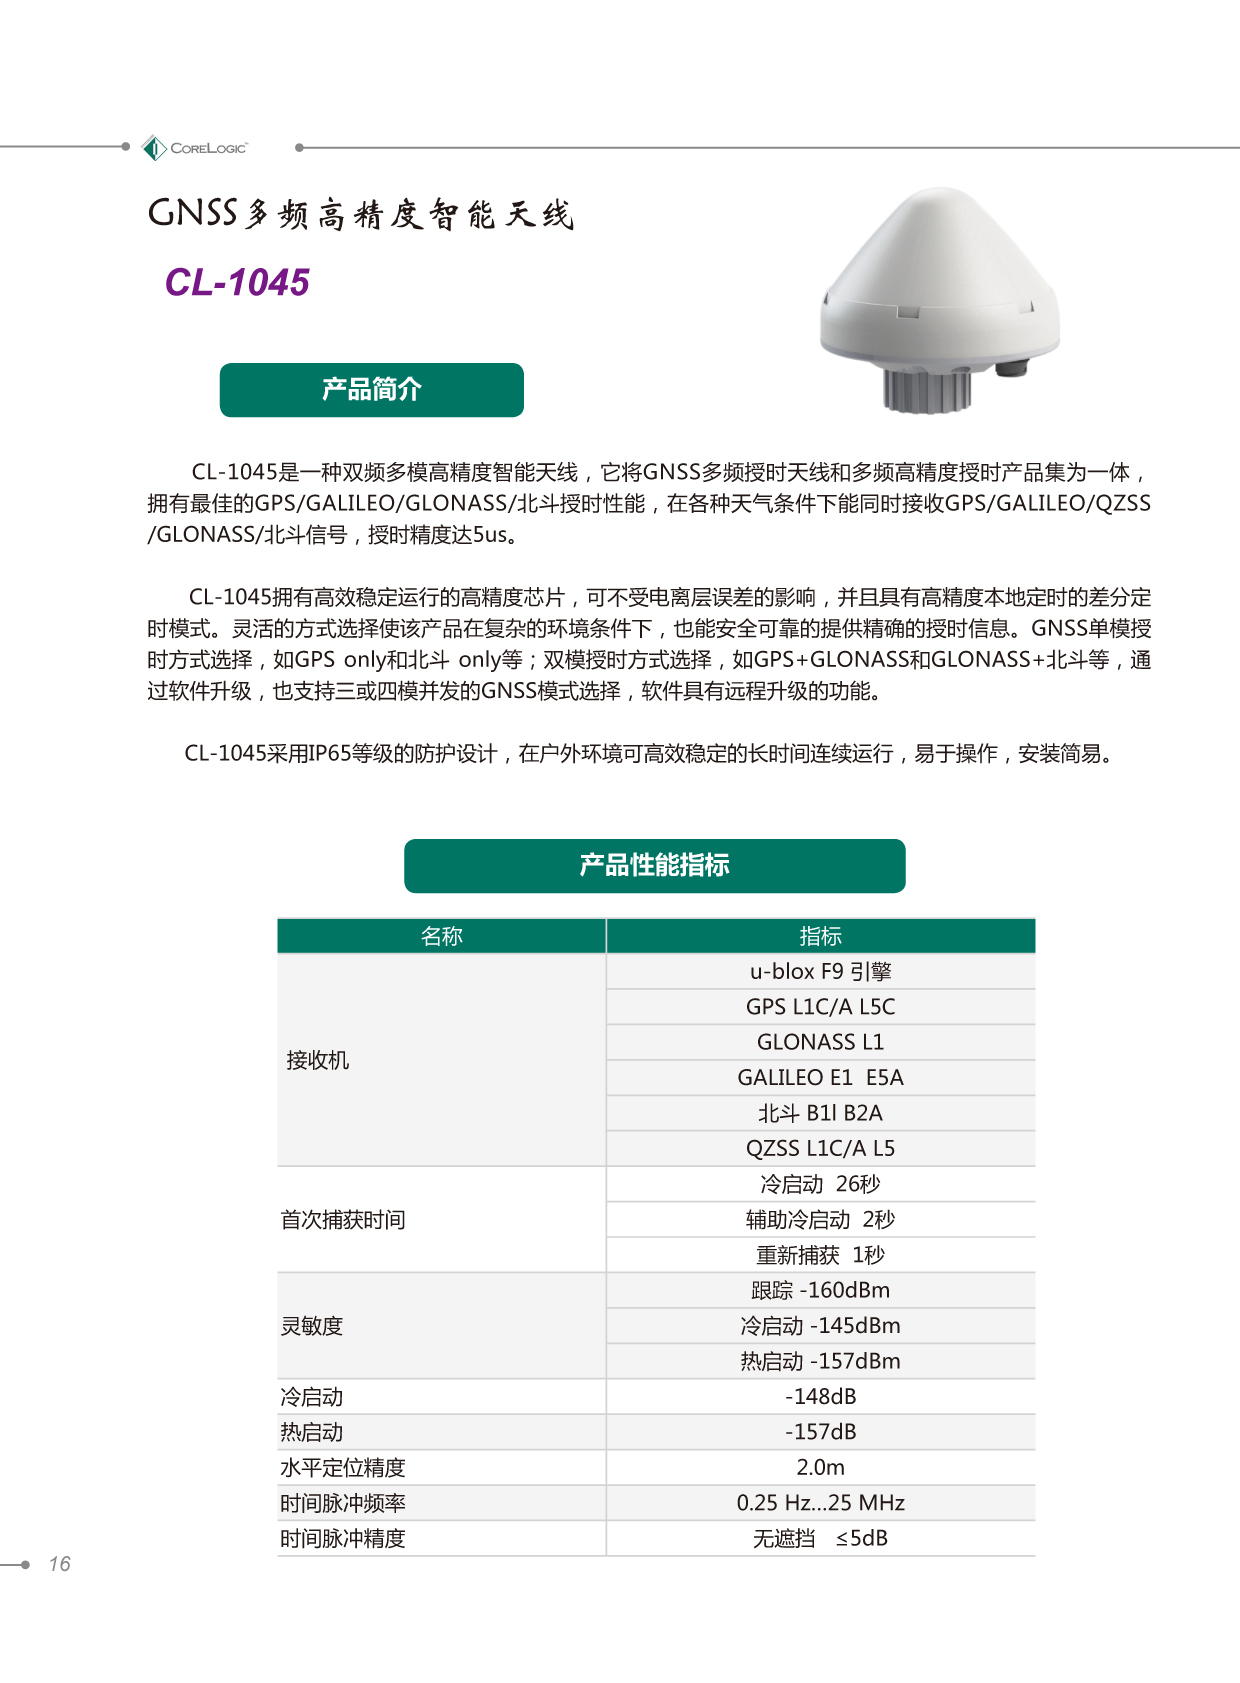 cl-1045-1产品详情